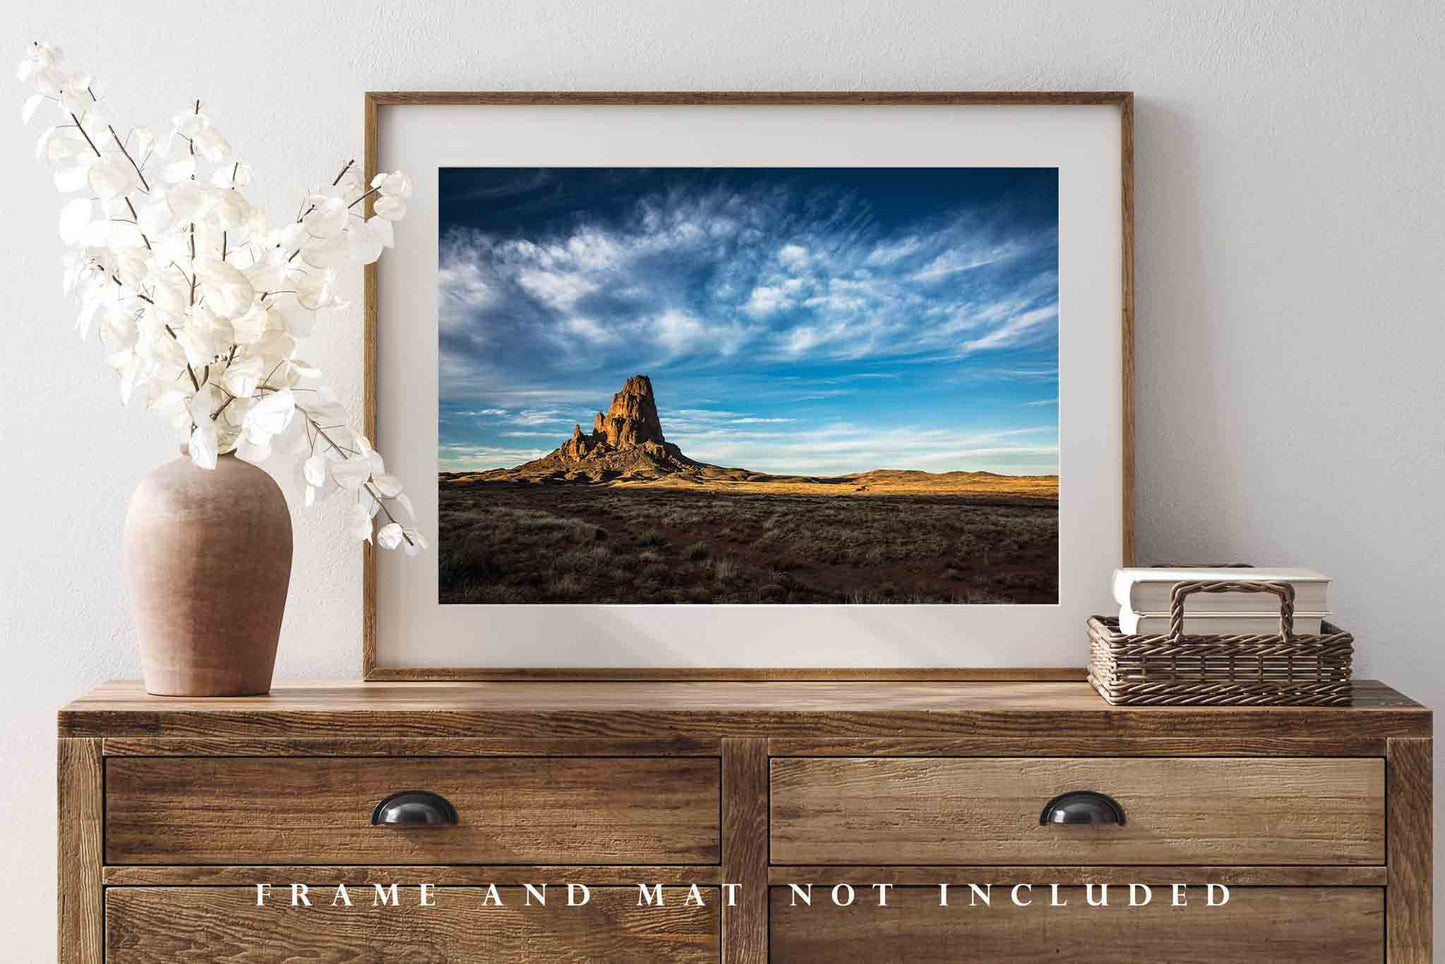 Southwest Photography Print - Picture of Agathla Peak near Monument Valley Arizona - Western Landscape Home Decor Wall Art Photo Artwork